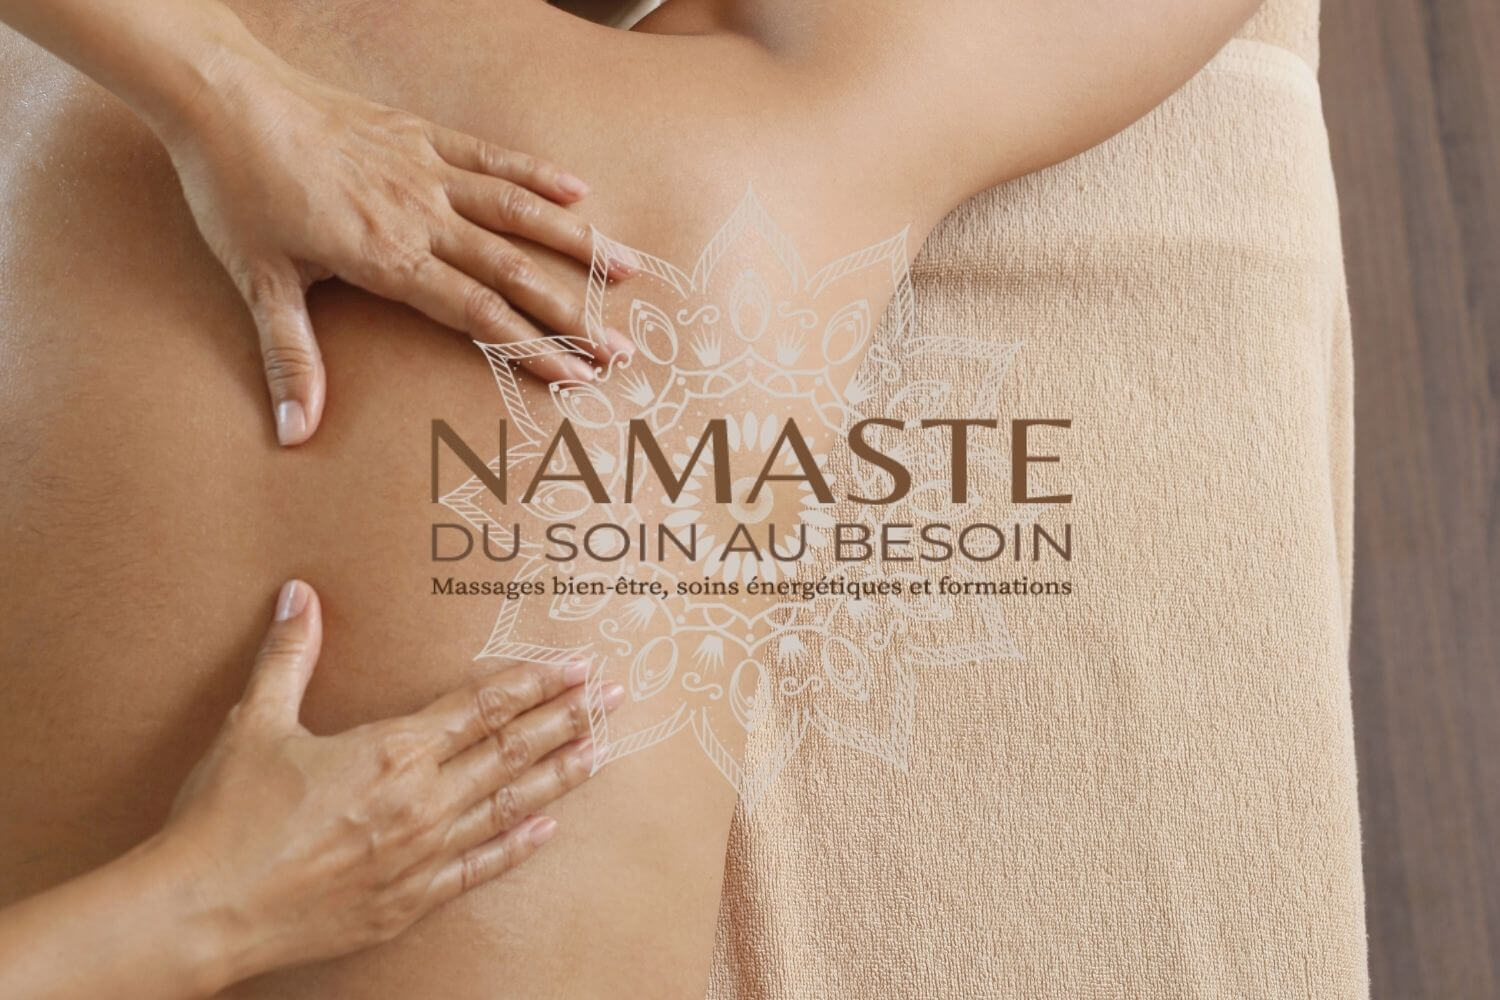 Namasté, massage sollies pont